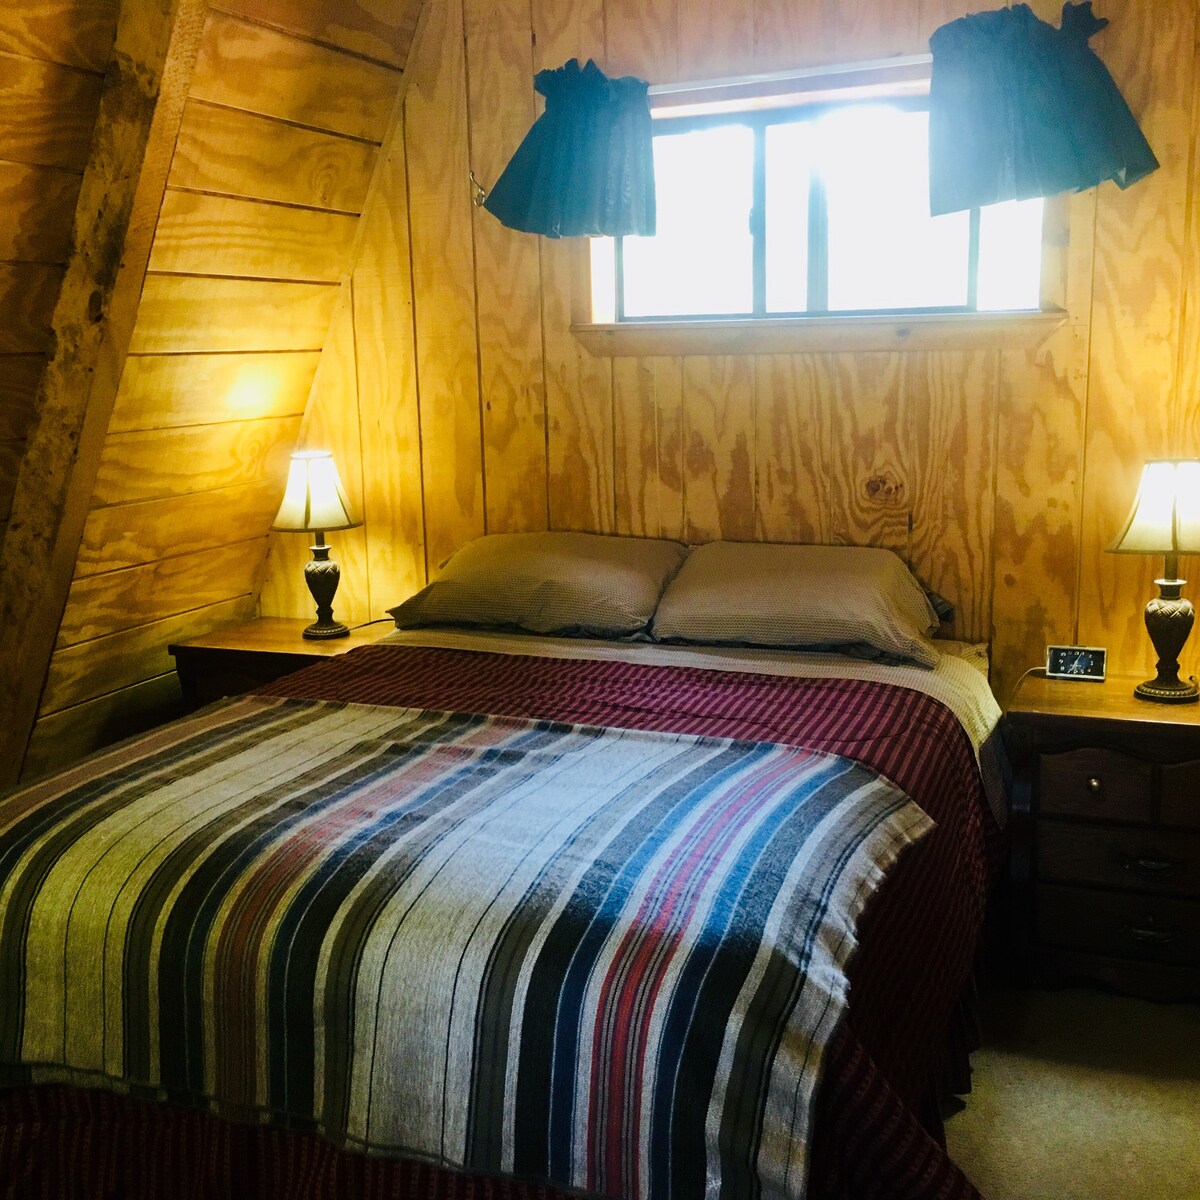 Zuni Mountain Cabin at Guest Retreat